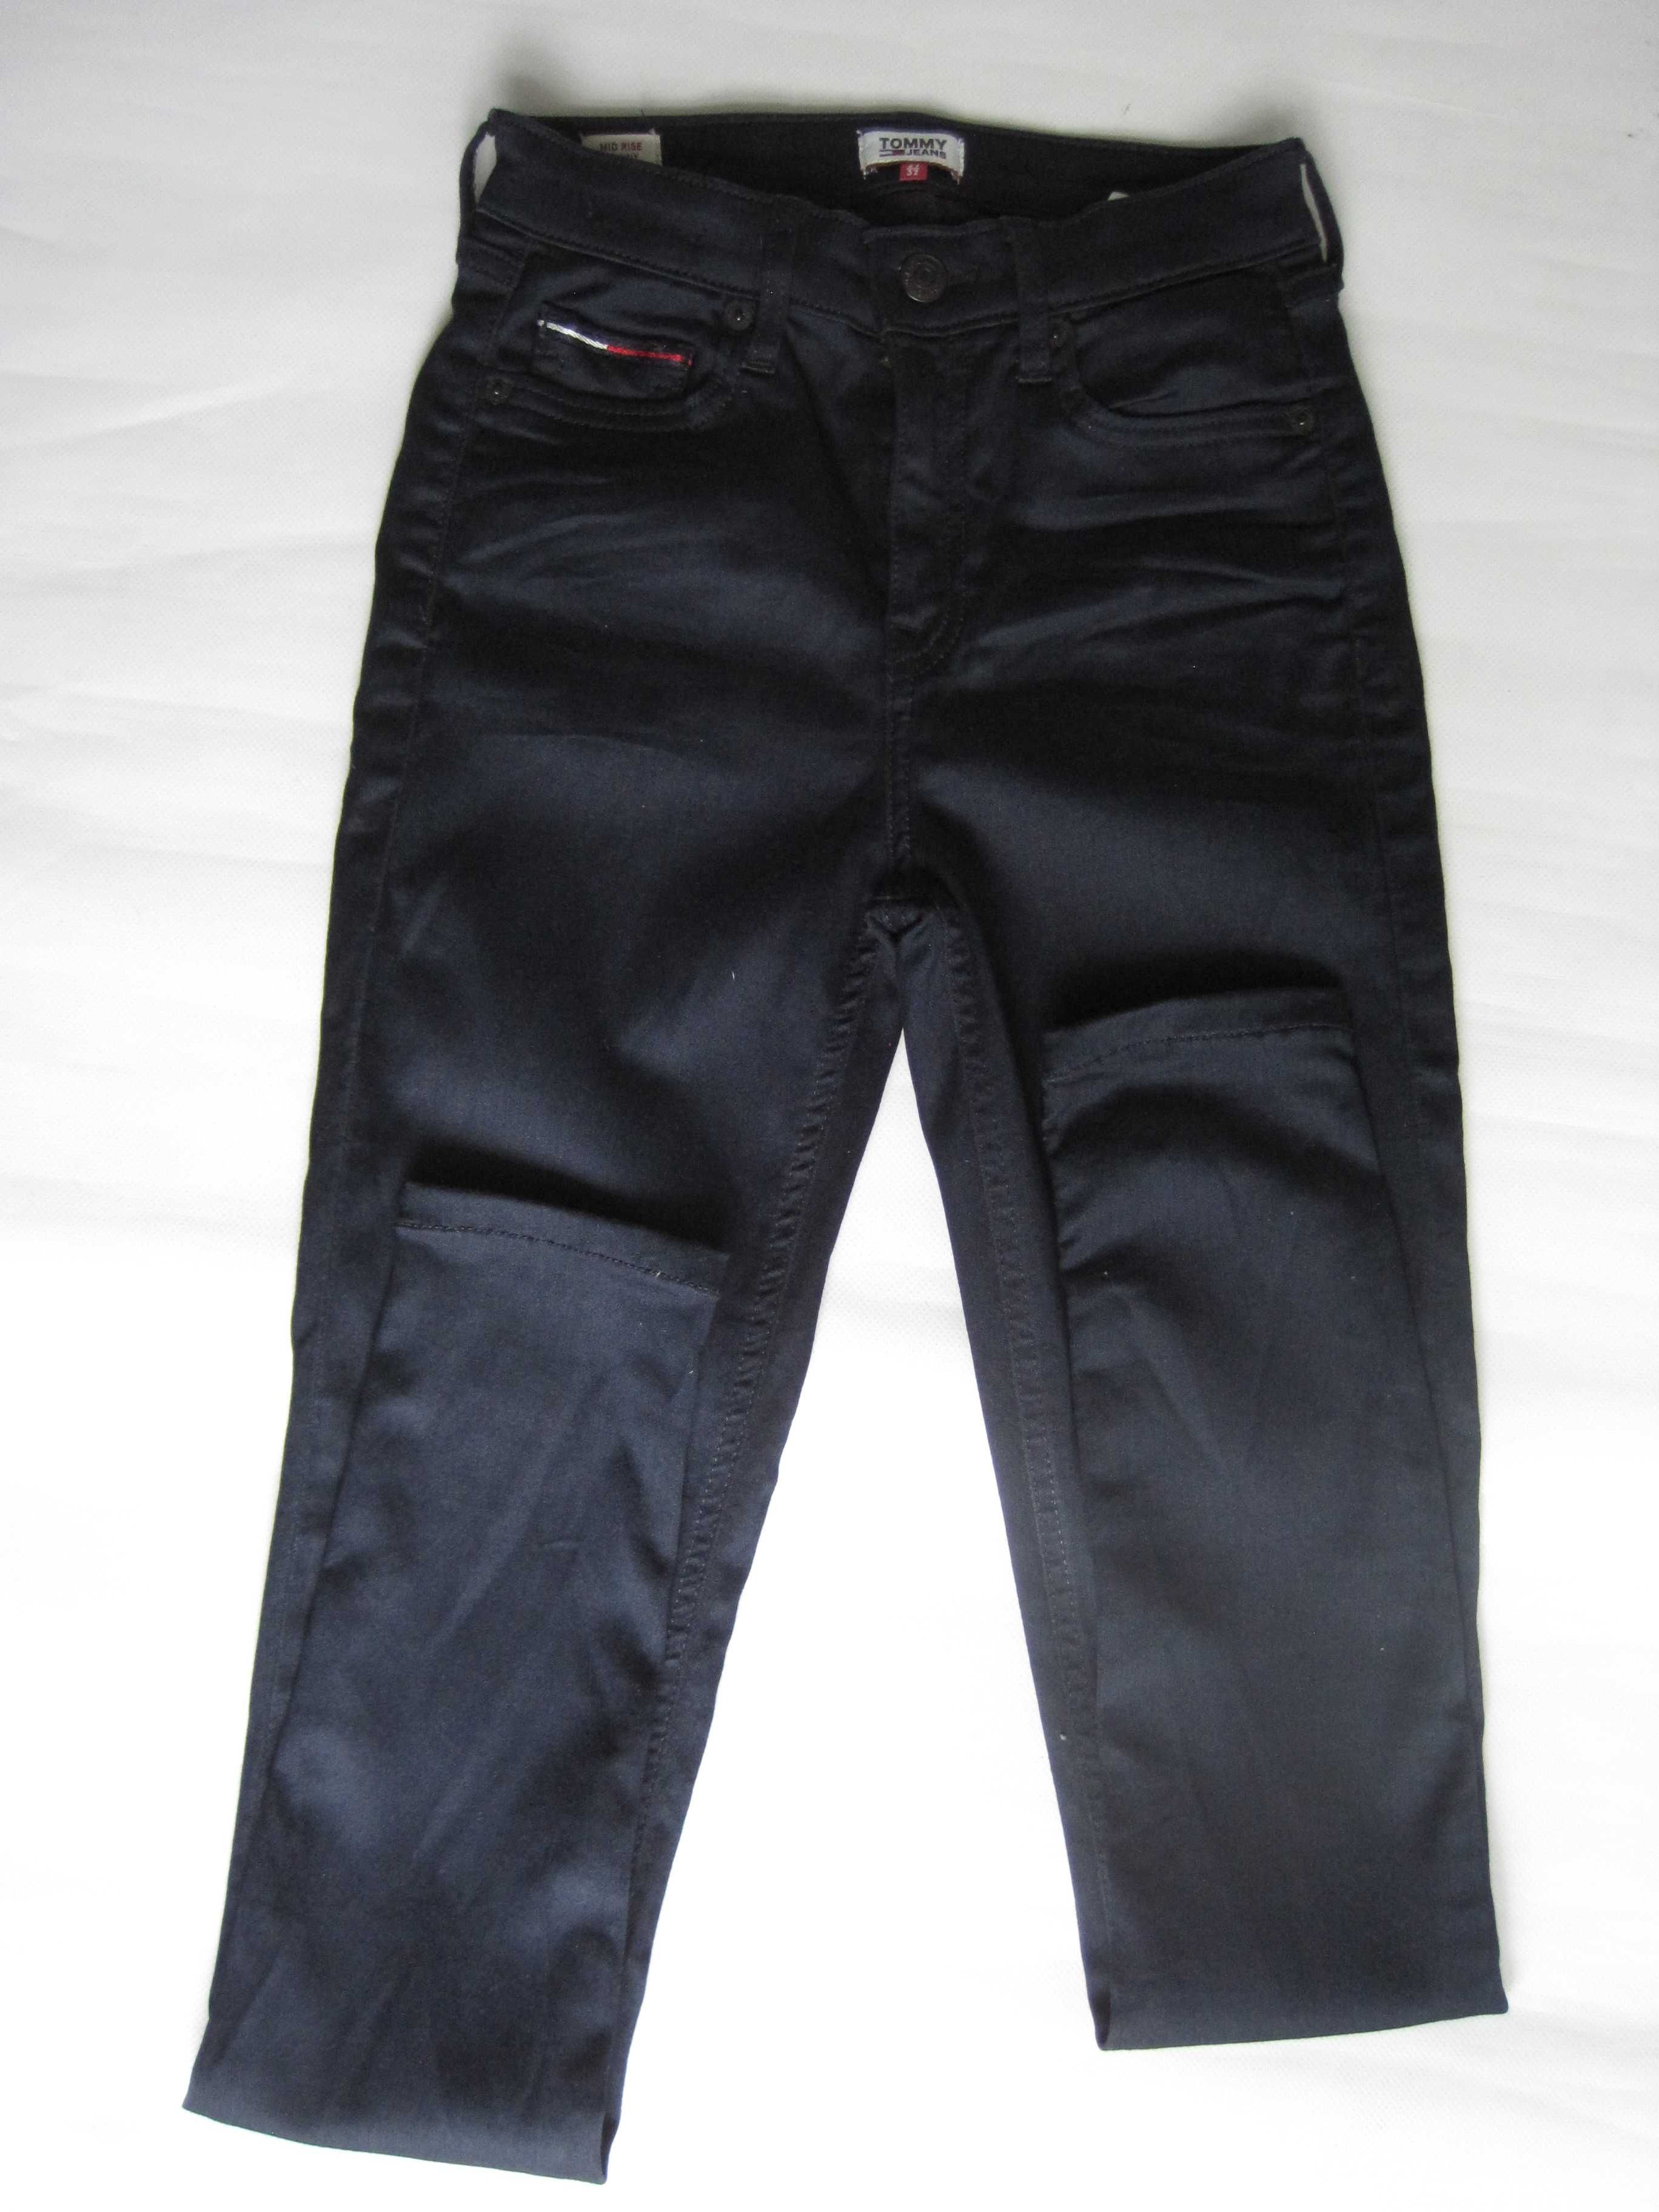 Jeans spodnie Tommy Hilfiger Jeans 27 32 NORA damskie skinny mid rise